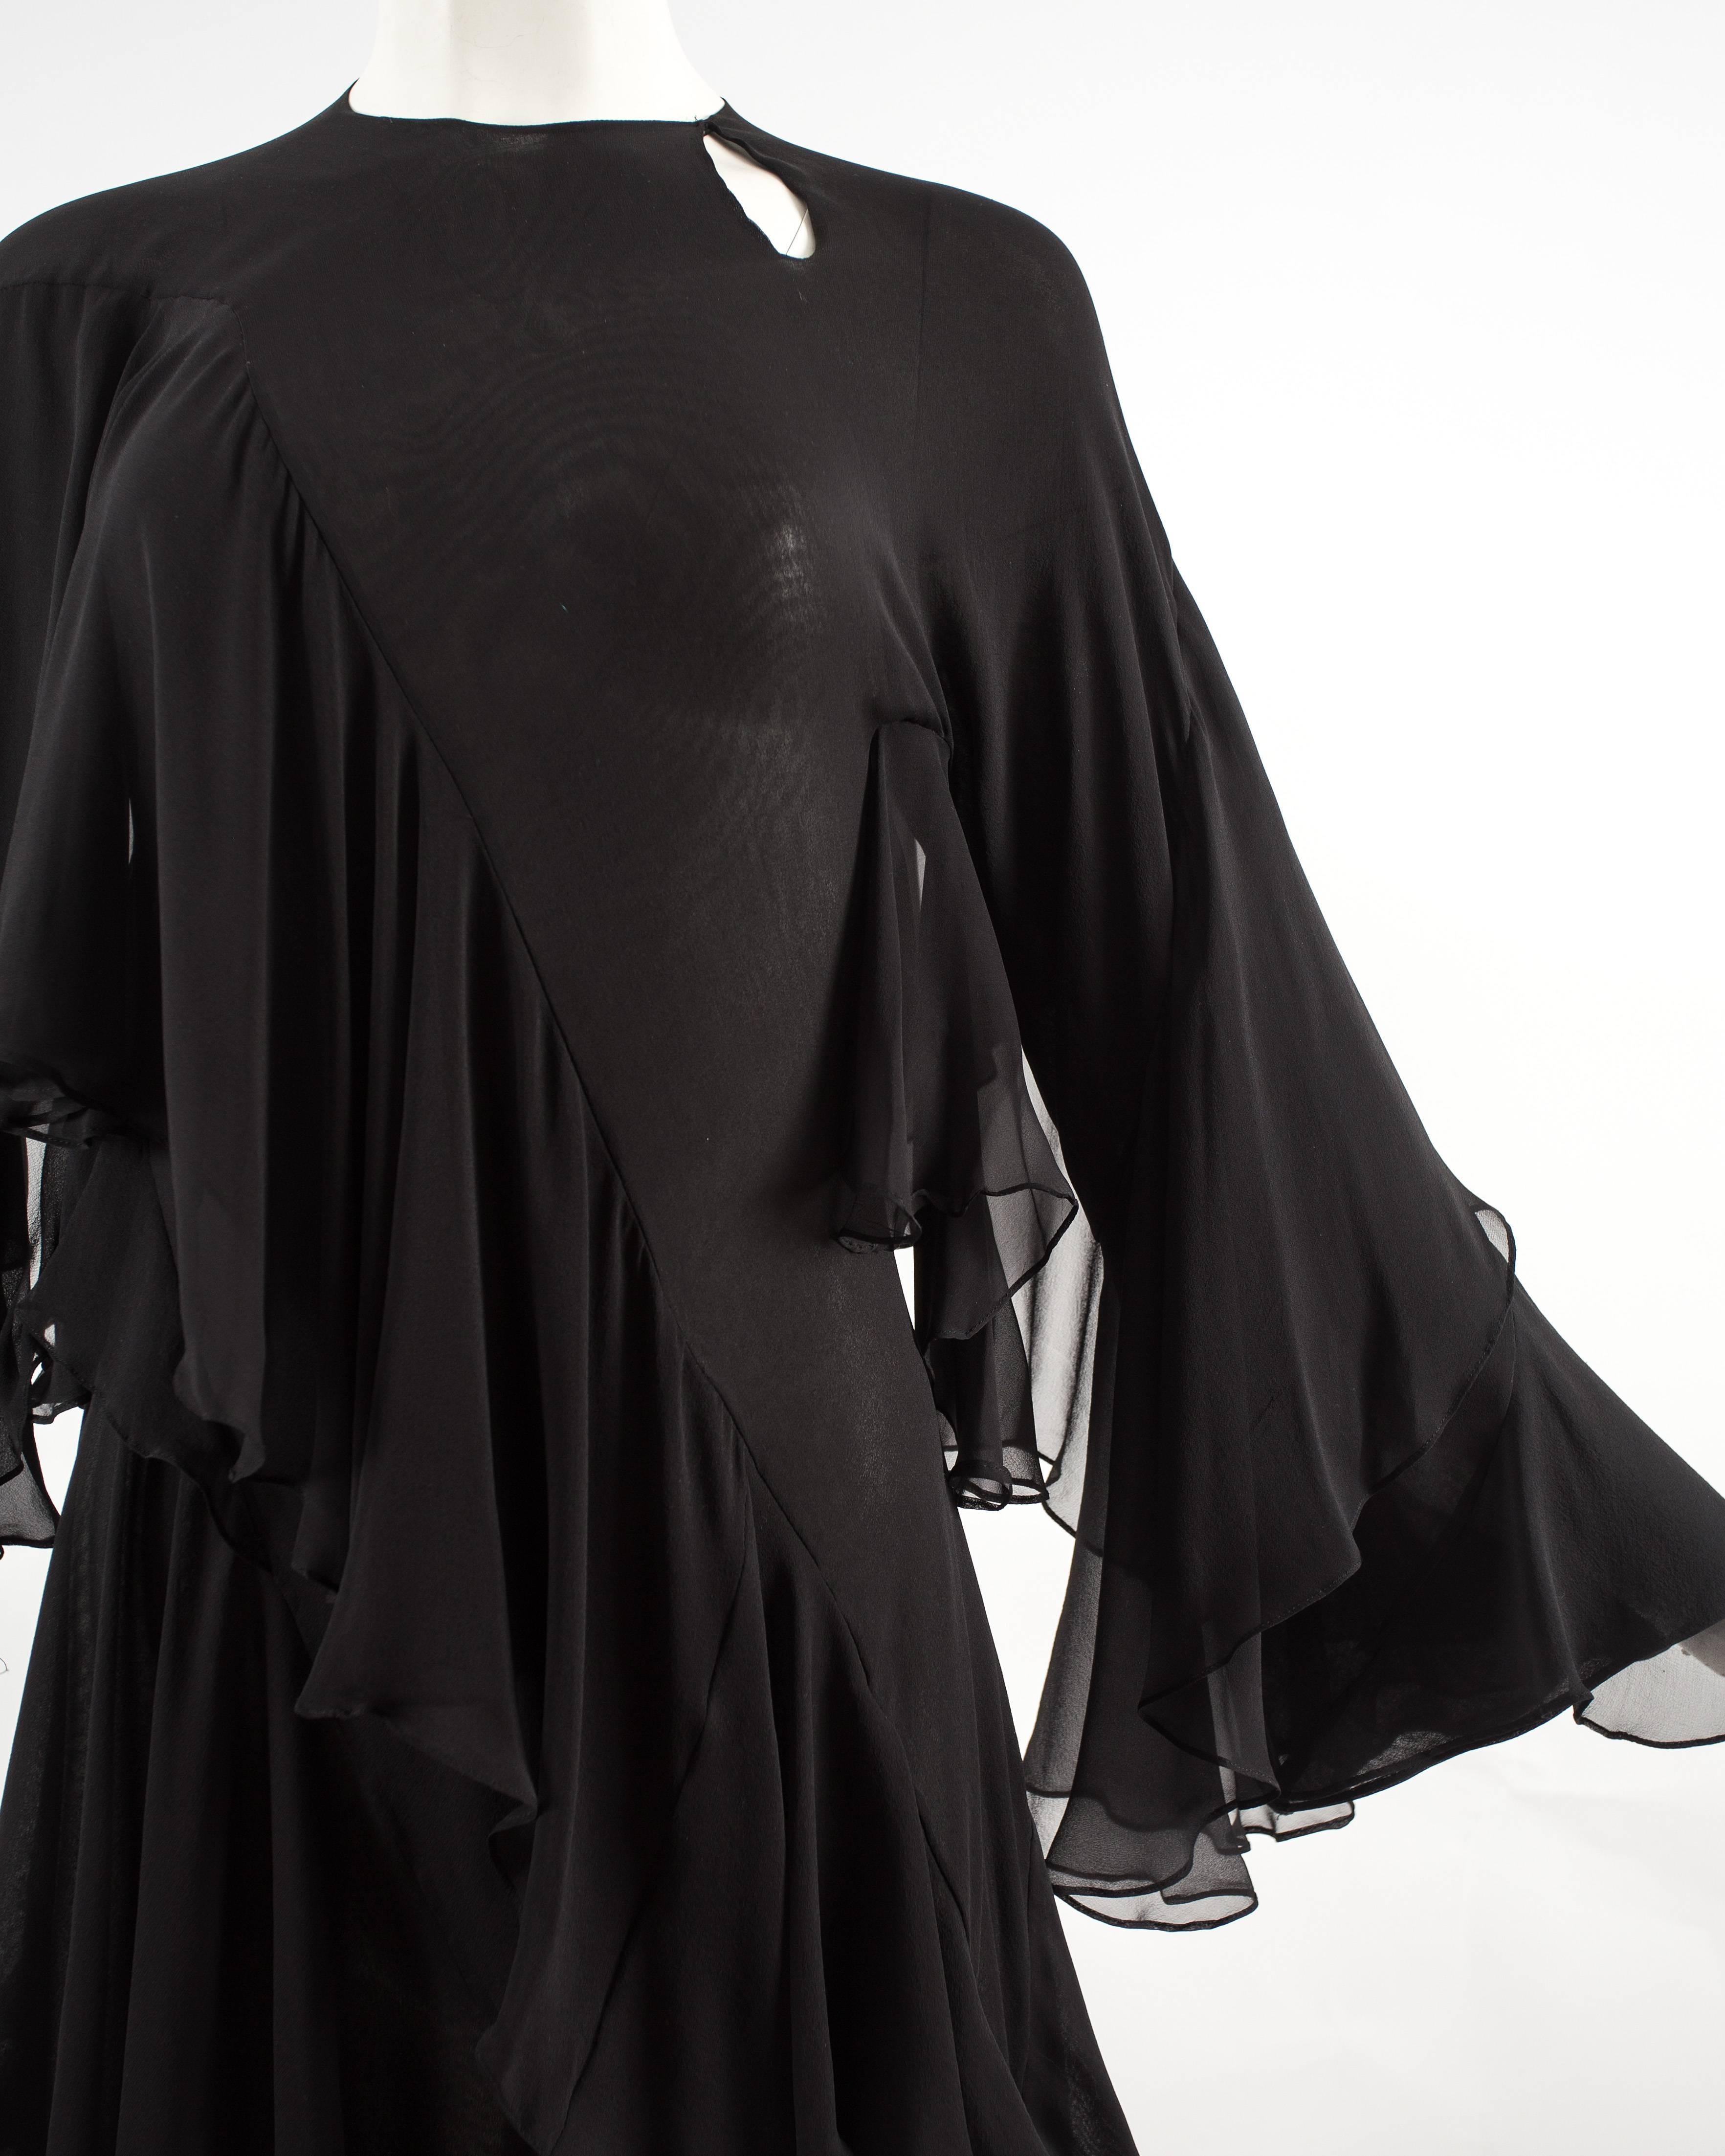 Women's Tom Ford for Gucci Autumn-Winter 1999 black silk georgette bias cut mini dress